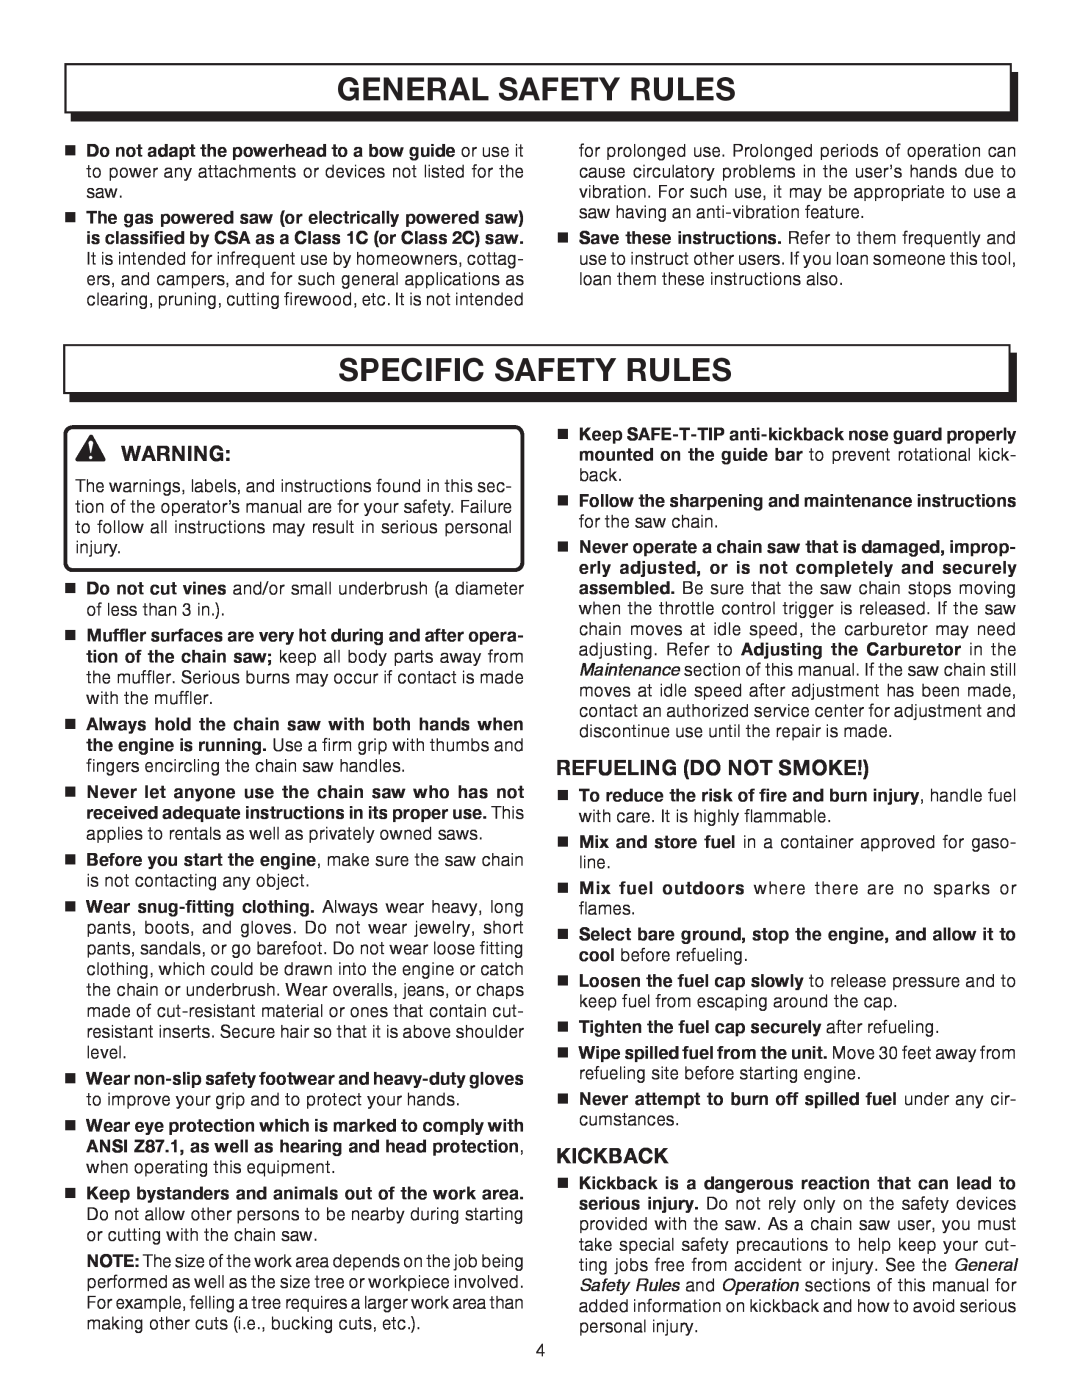 Homelite UT10512, UT10032, UT10012 manual Specific Safety Rules, General Safety Rules, Refueling Do Not Smoke, Kickback 